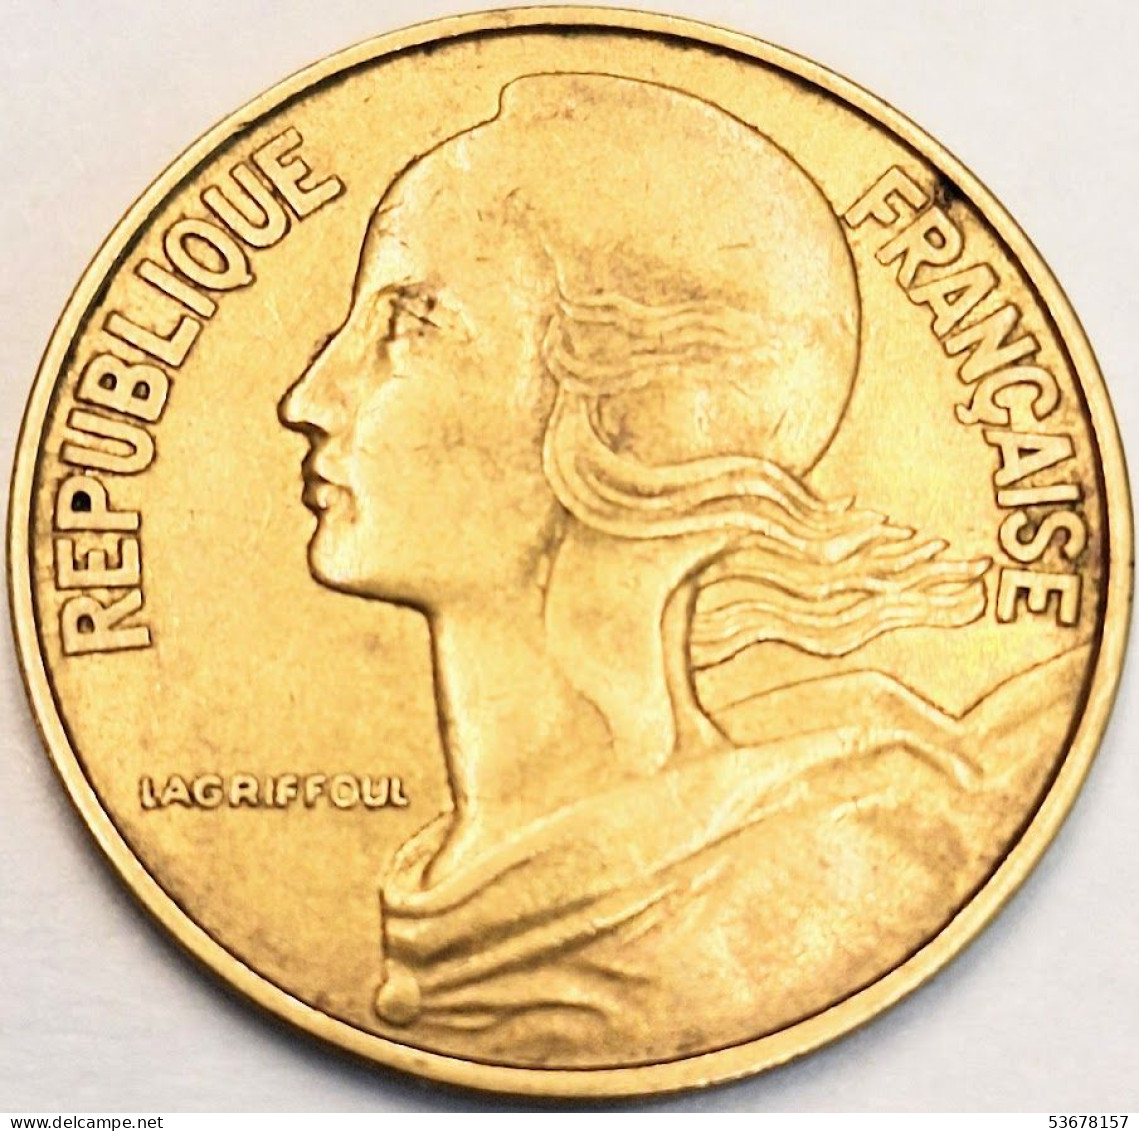 France - 20 Centimes 1964, KM# 930 (#4250) - 20 Centimes